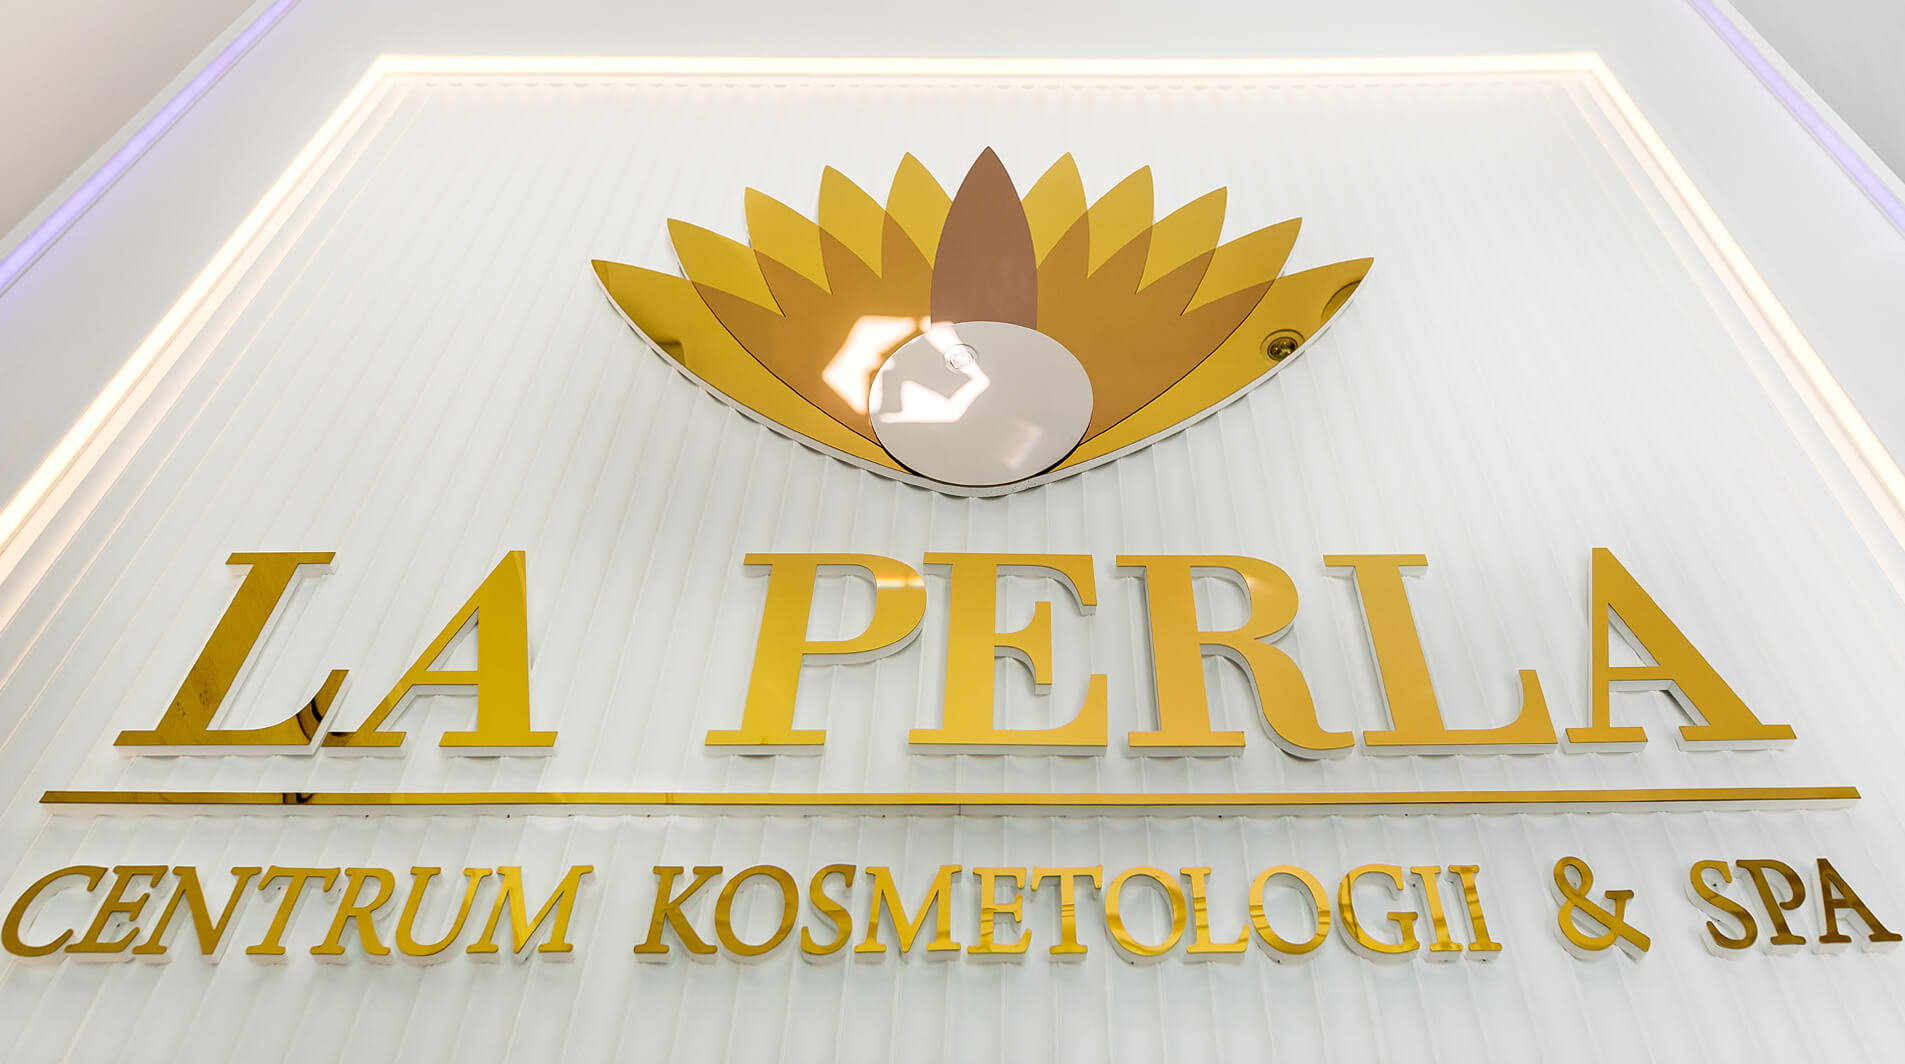 LA PERLA - 3D letters in goud met logo